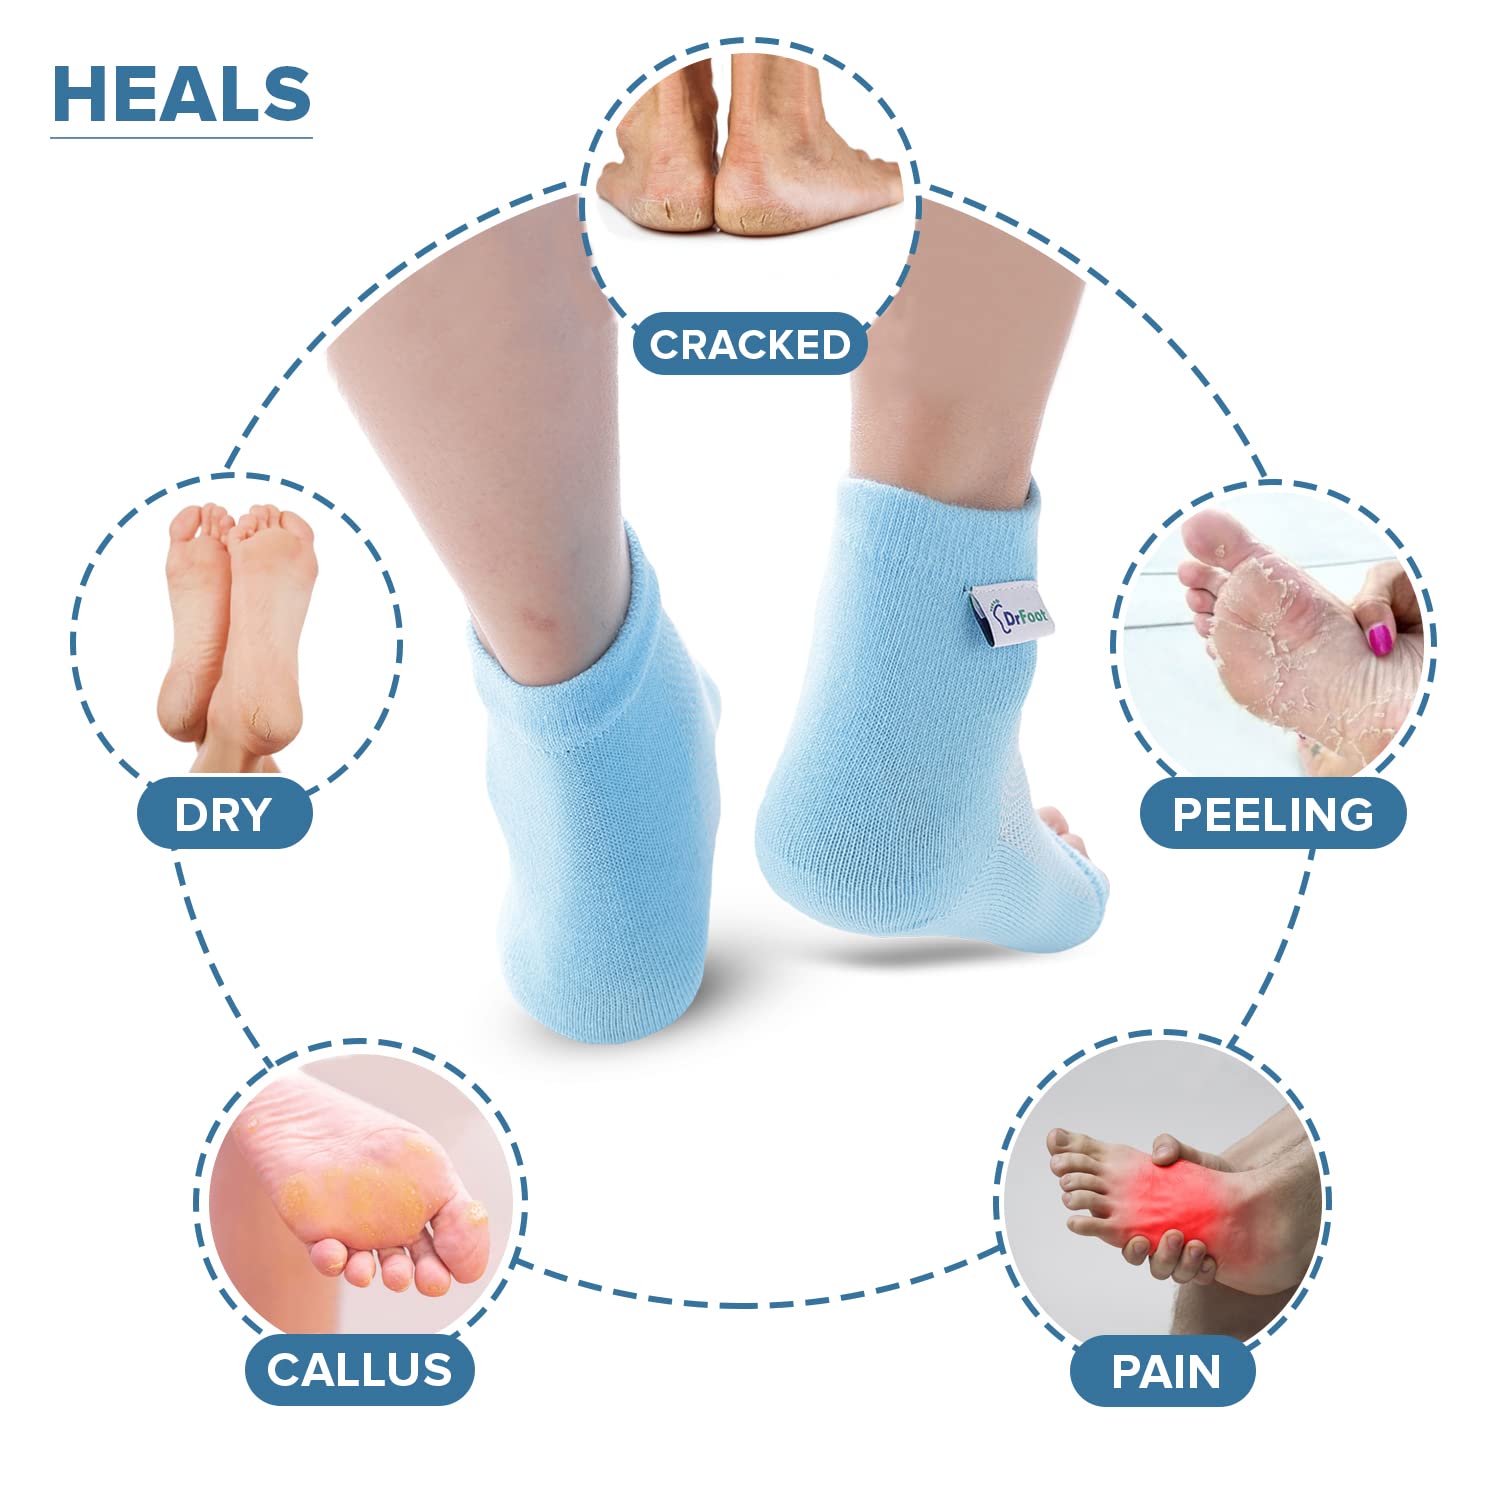 Moisturizing Socks Cracked Heel Treatment - Treat Dry Feet & Heels Fast.  Pain Relief from Cracking Foot Skin with Aloe Moisturizer Lotion Infused  Gel Heel Socks. Pedicure for Both Women & Men (